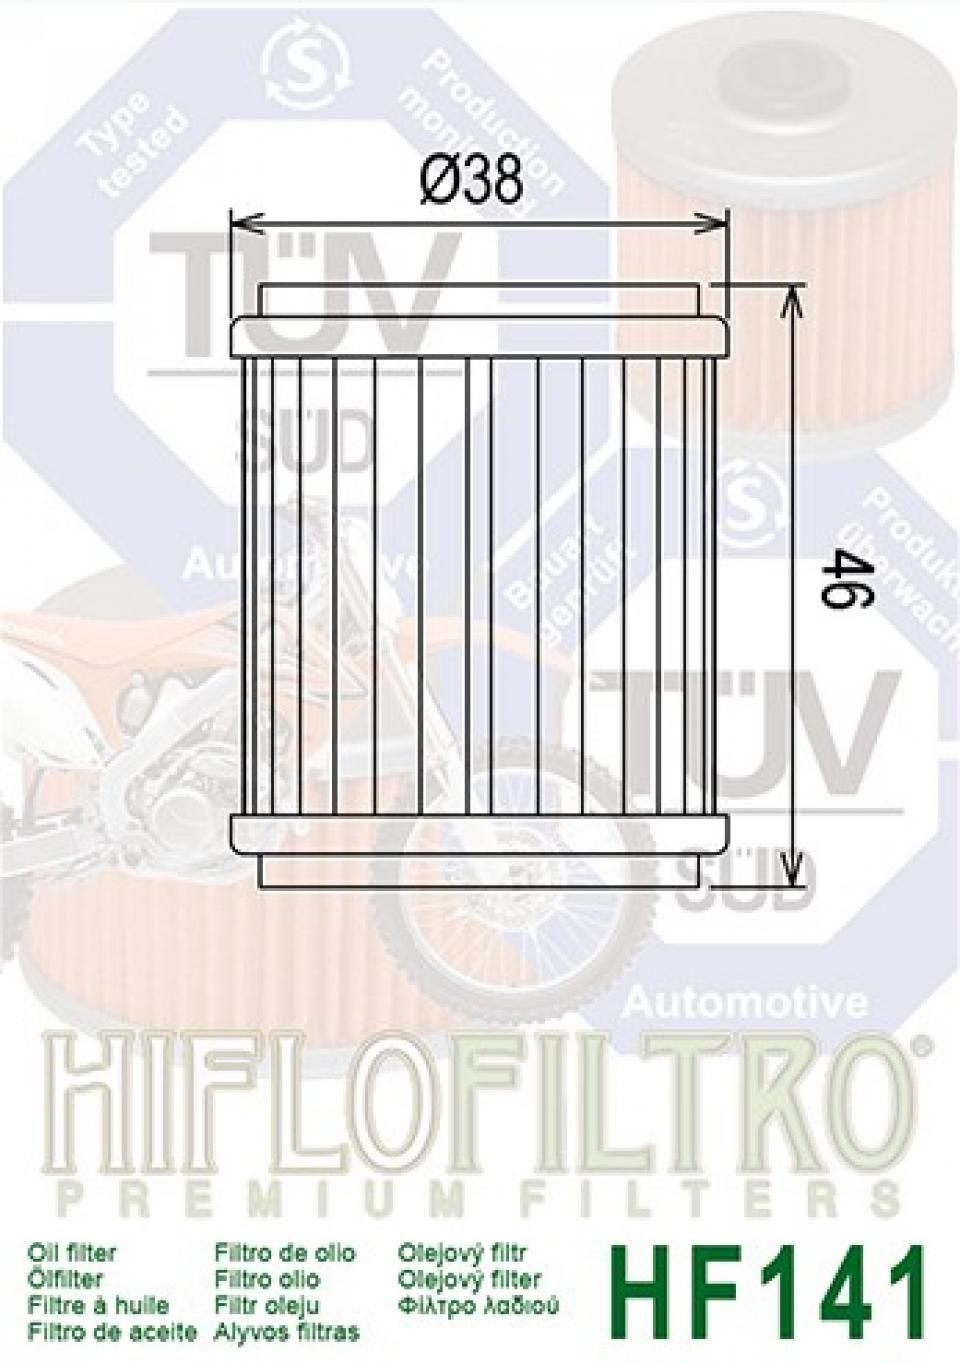 Filtre à huile Hiflofiltro pour Moto TM 530 En Fi 4T Enduro 2007 à 2015 Neuf